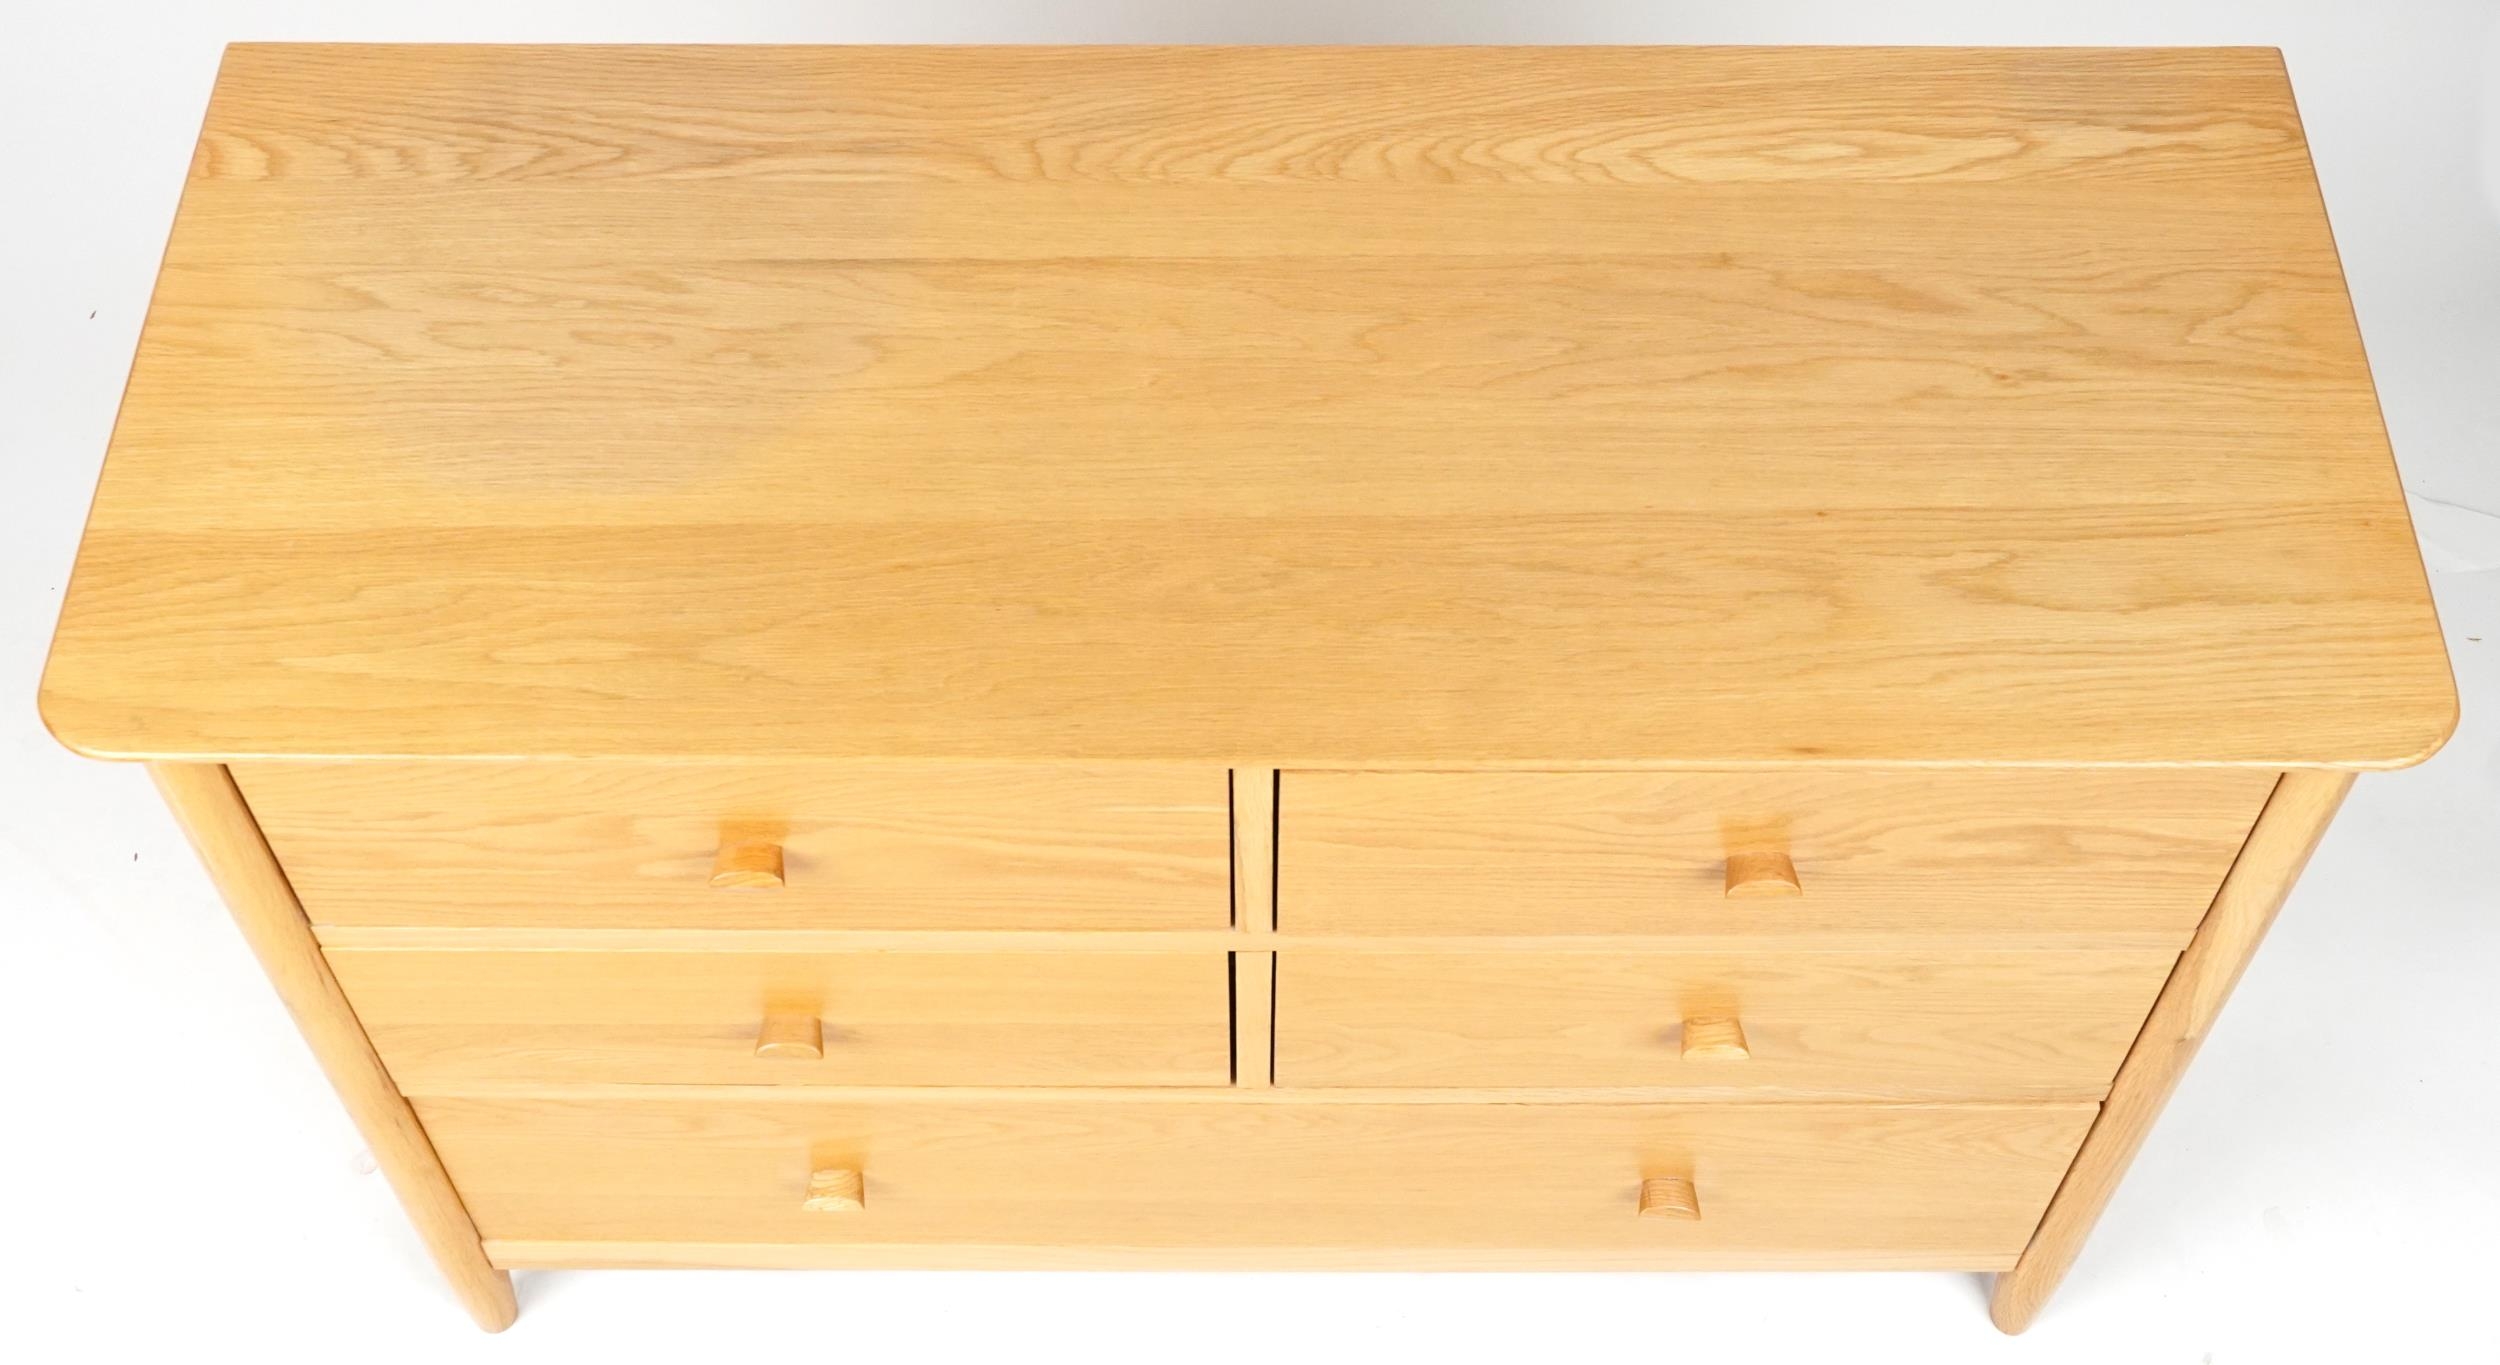 Ercol Teramo contemporary light oak five drawer chest, 79cm H x 114cm W x 47cm D - Image 3 of 6